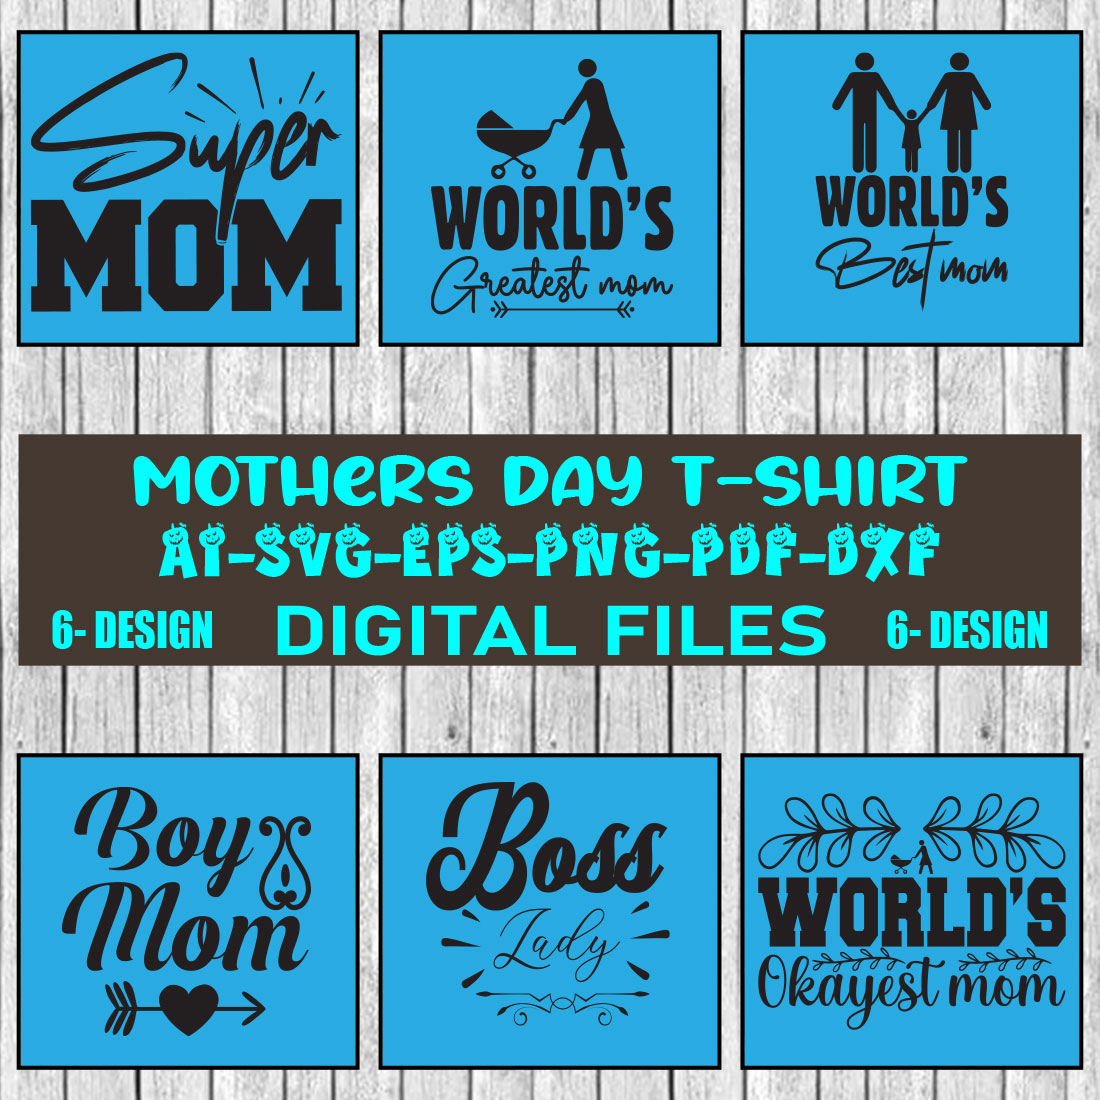 Mothers Day T-shirt Design Bundle Vol-07 cover image.